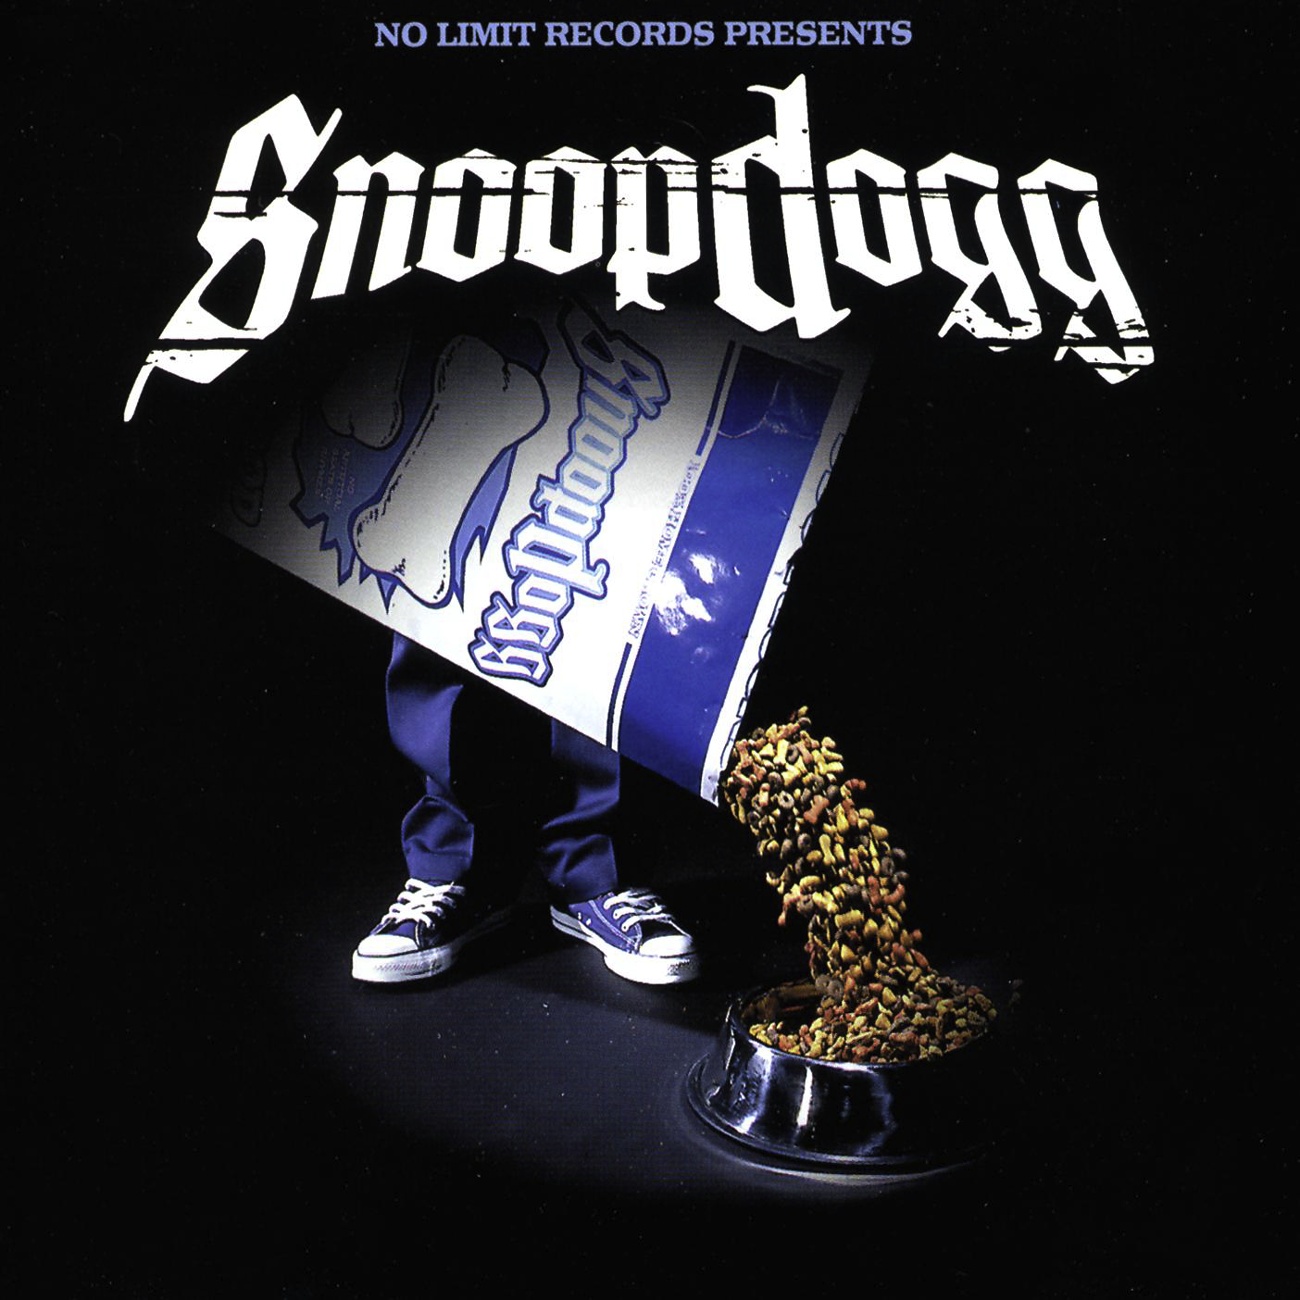 Snoop Dogg/Back Up Ho